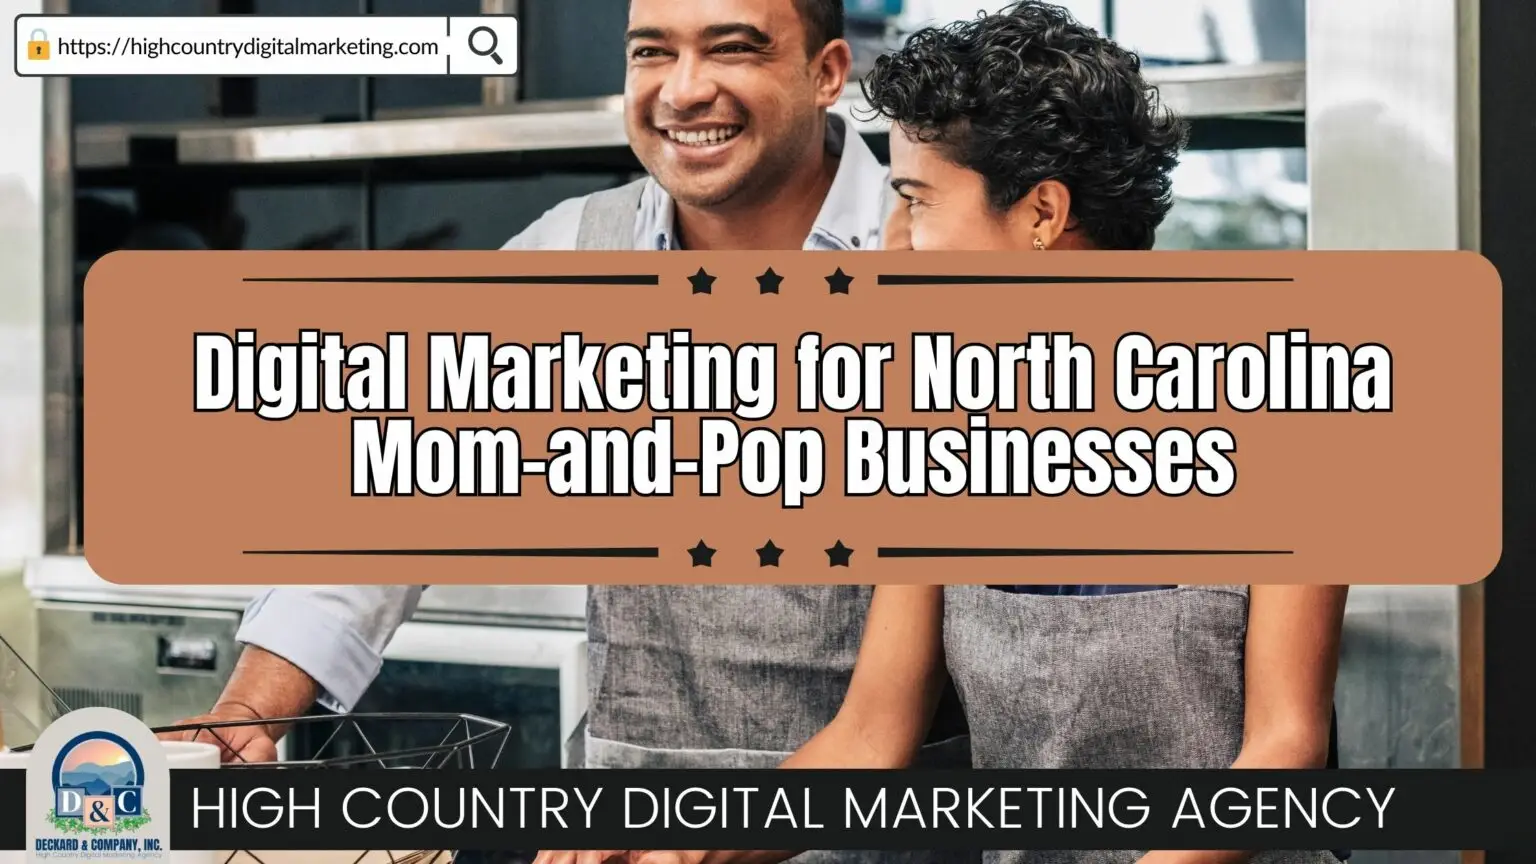 Digital Marketing for North Carolina Mom-and-Pop Businesses by Deckard & Company a Boutique Marketing Agency